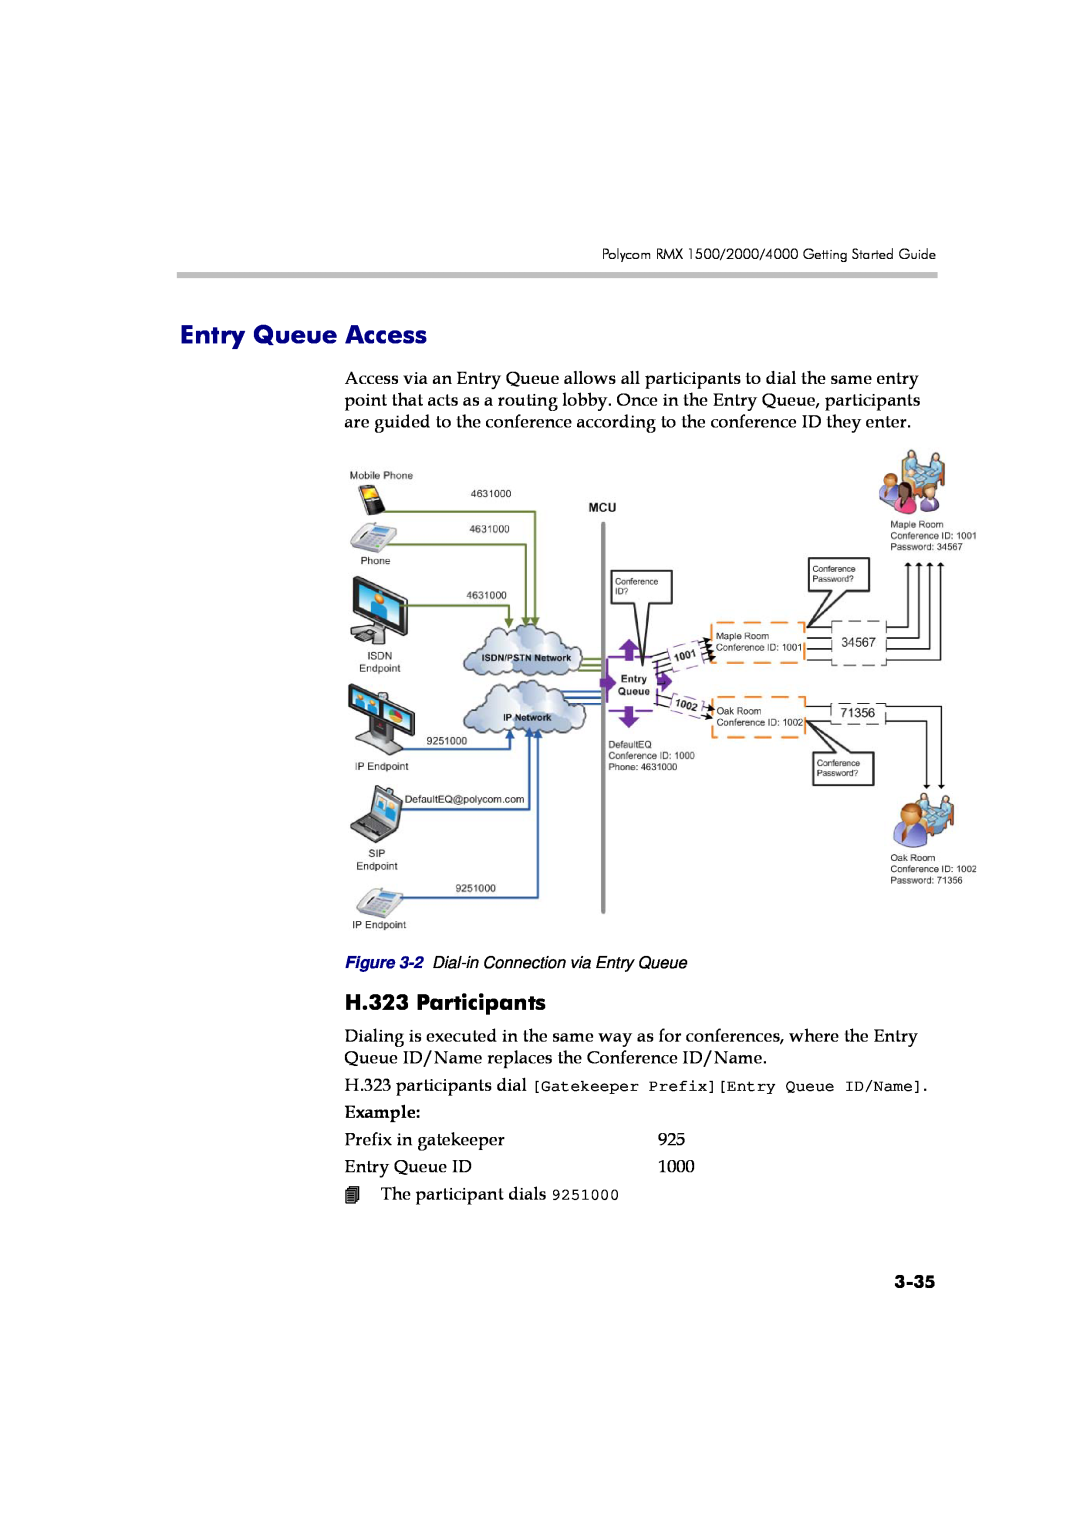 Polycom DOC2560A manual Entry Queue Access, 3-35, H.323 Participants, Example, 2 Dial-in Connection via Entry Queue 